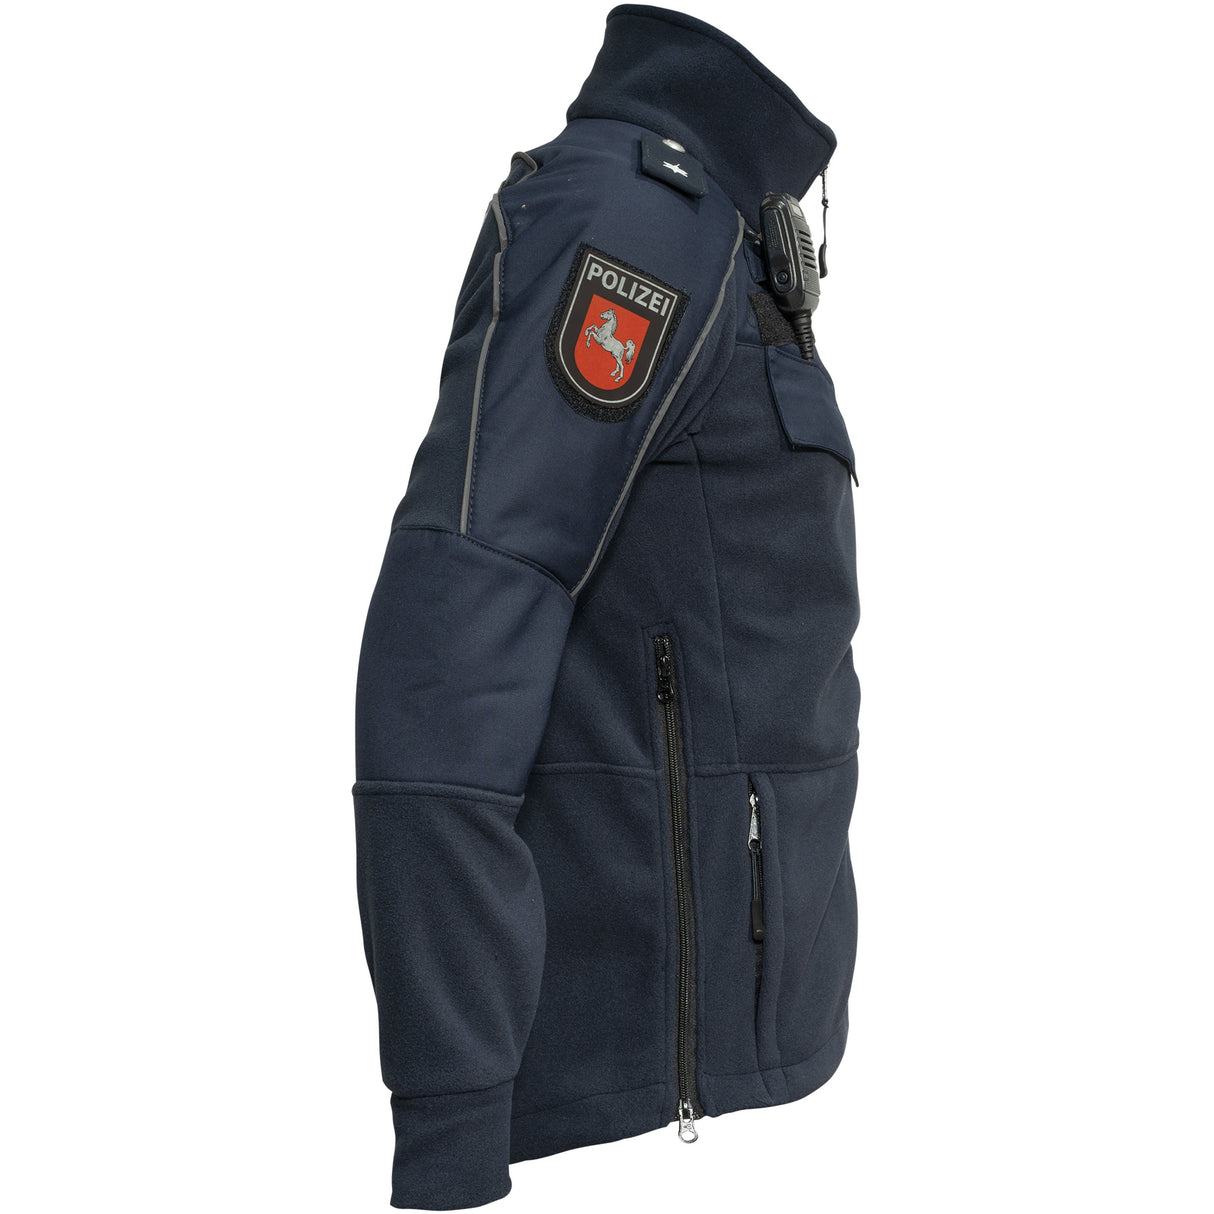 Recon Pro fleece jacket PDB PARISBLUE